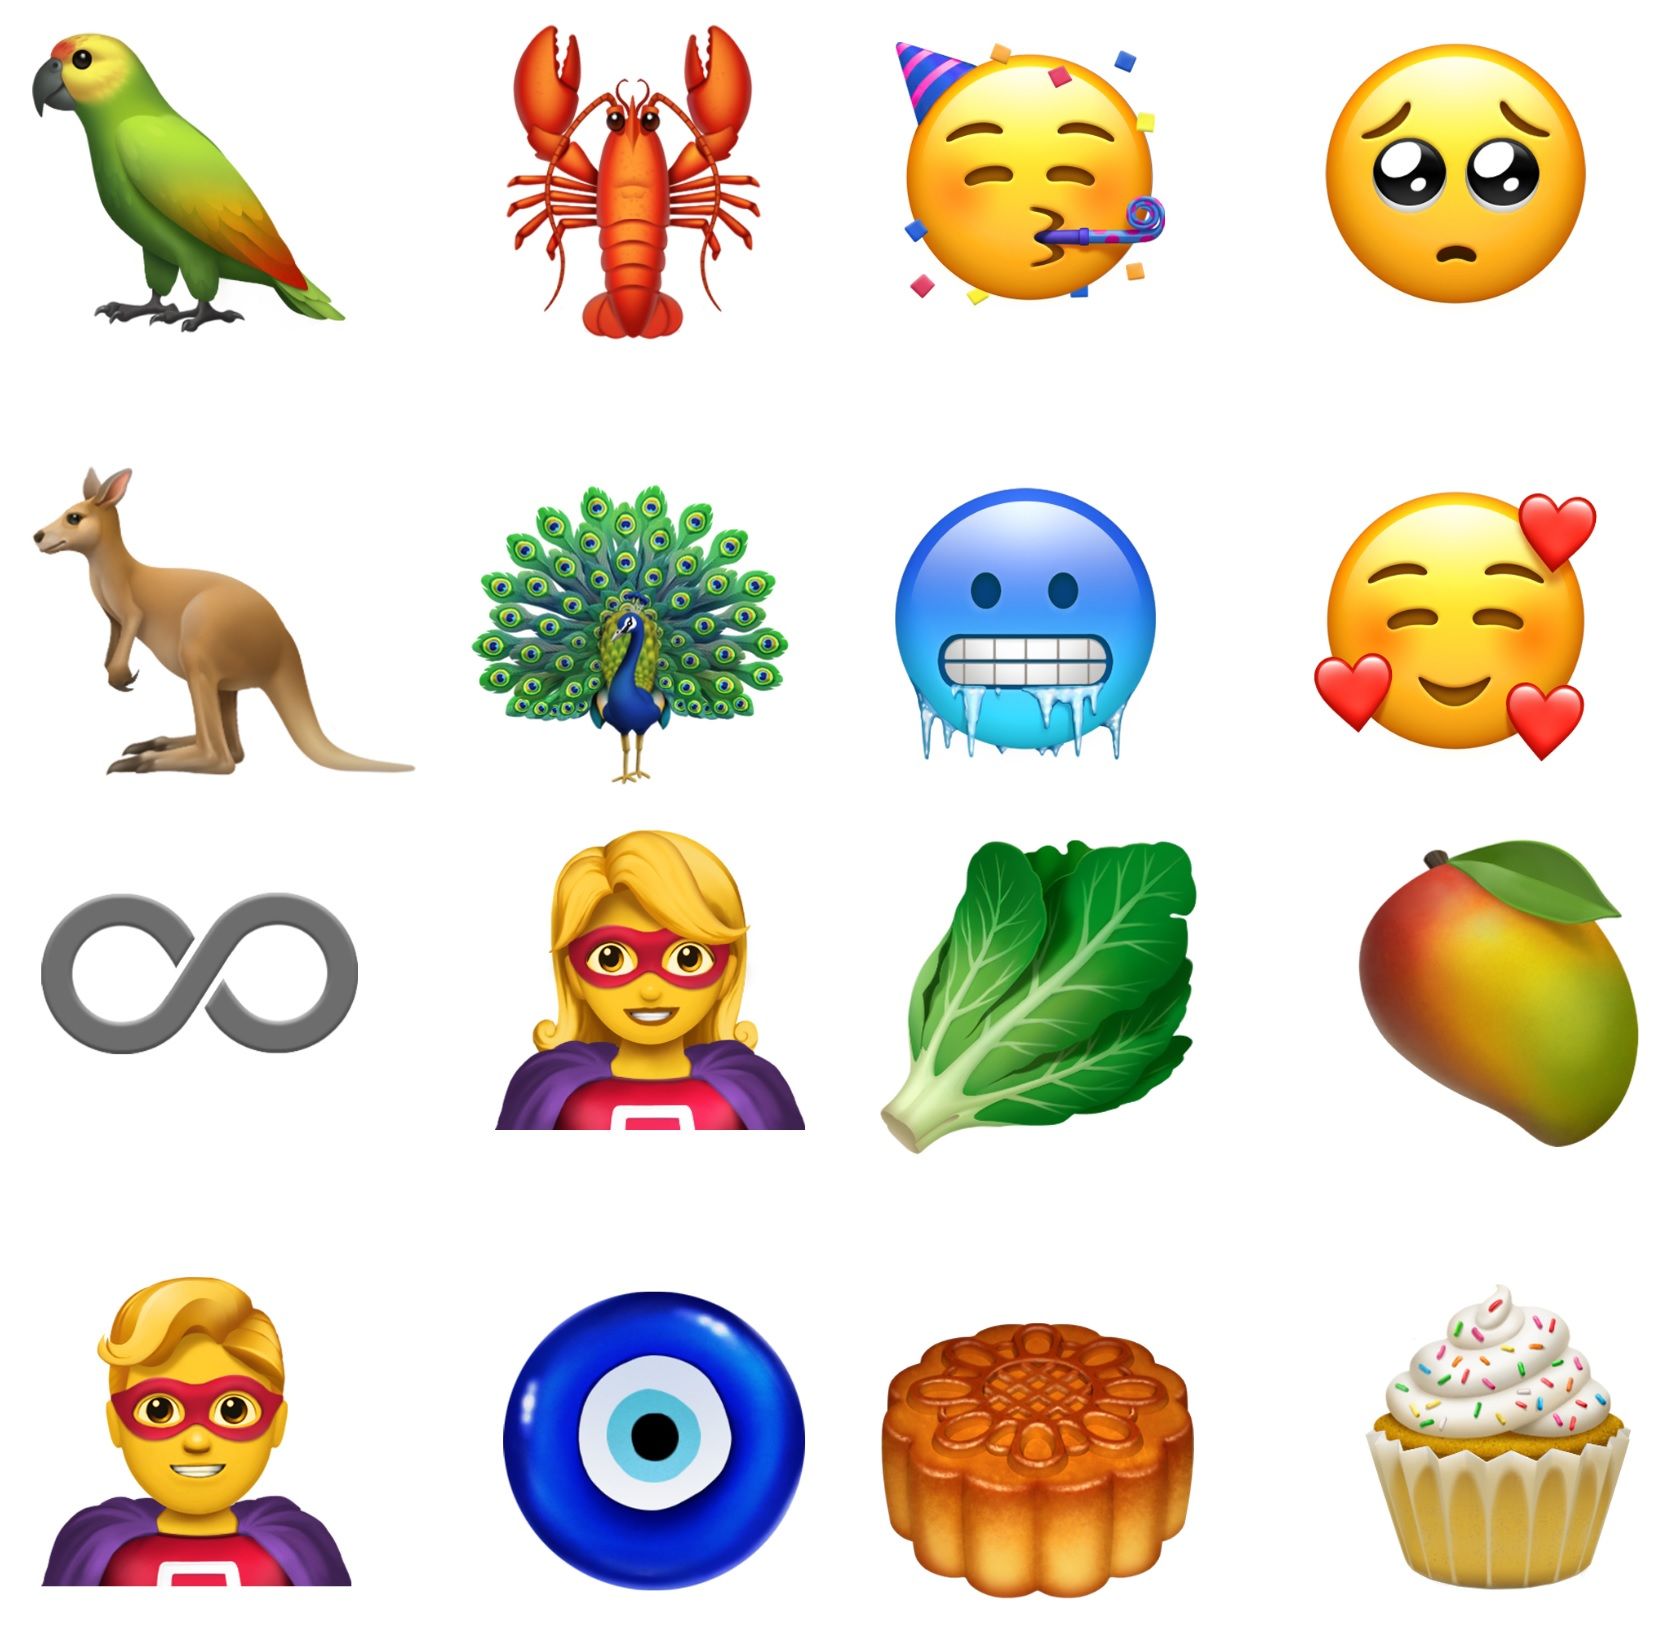 how to update new emojis on mac